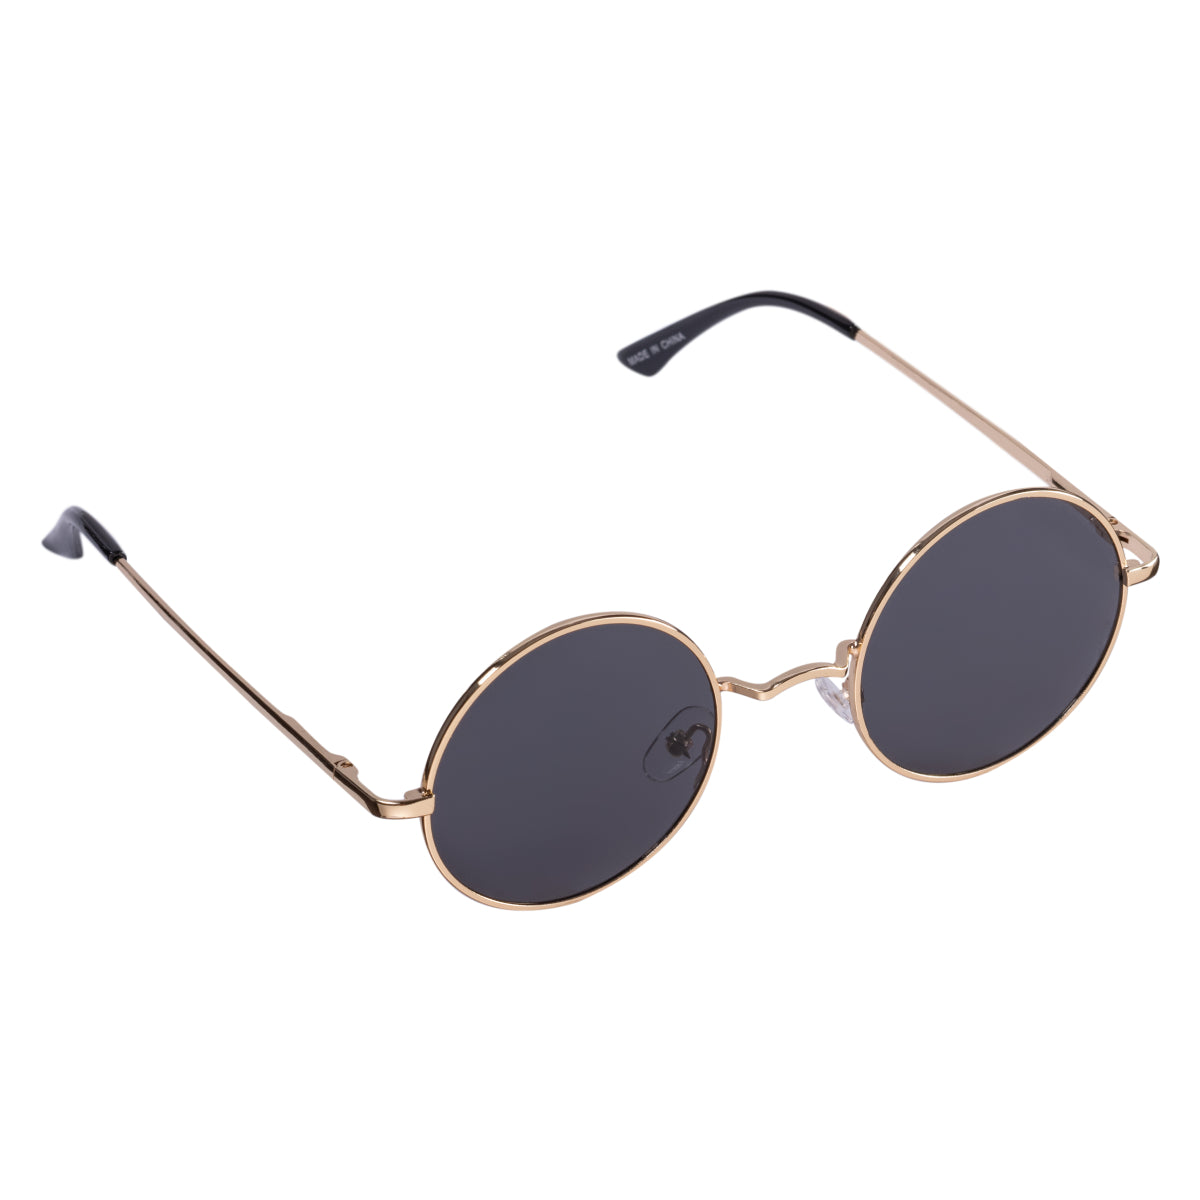 John Lennon Vintage Round Sunglasses Costume Accessory - Black